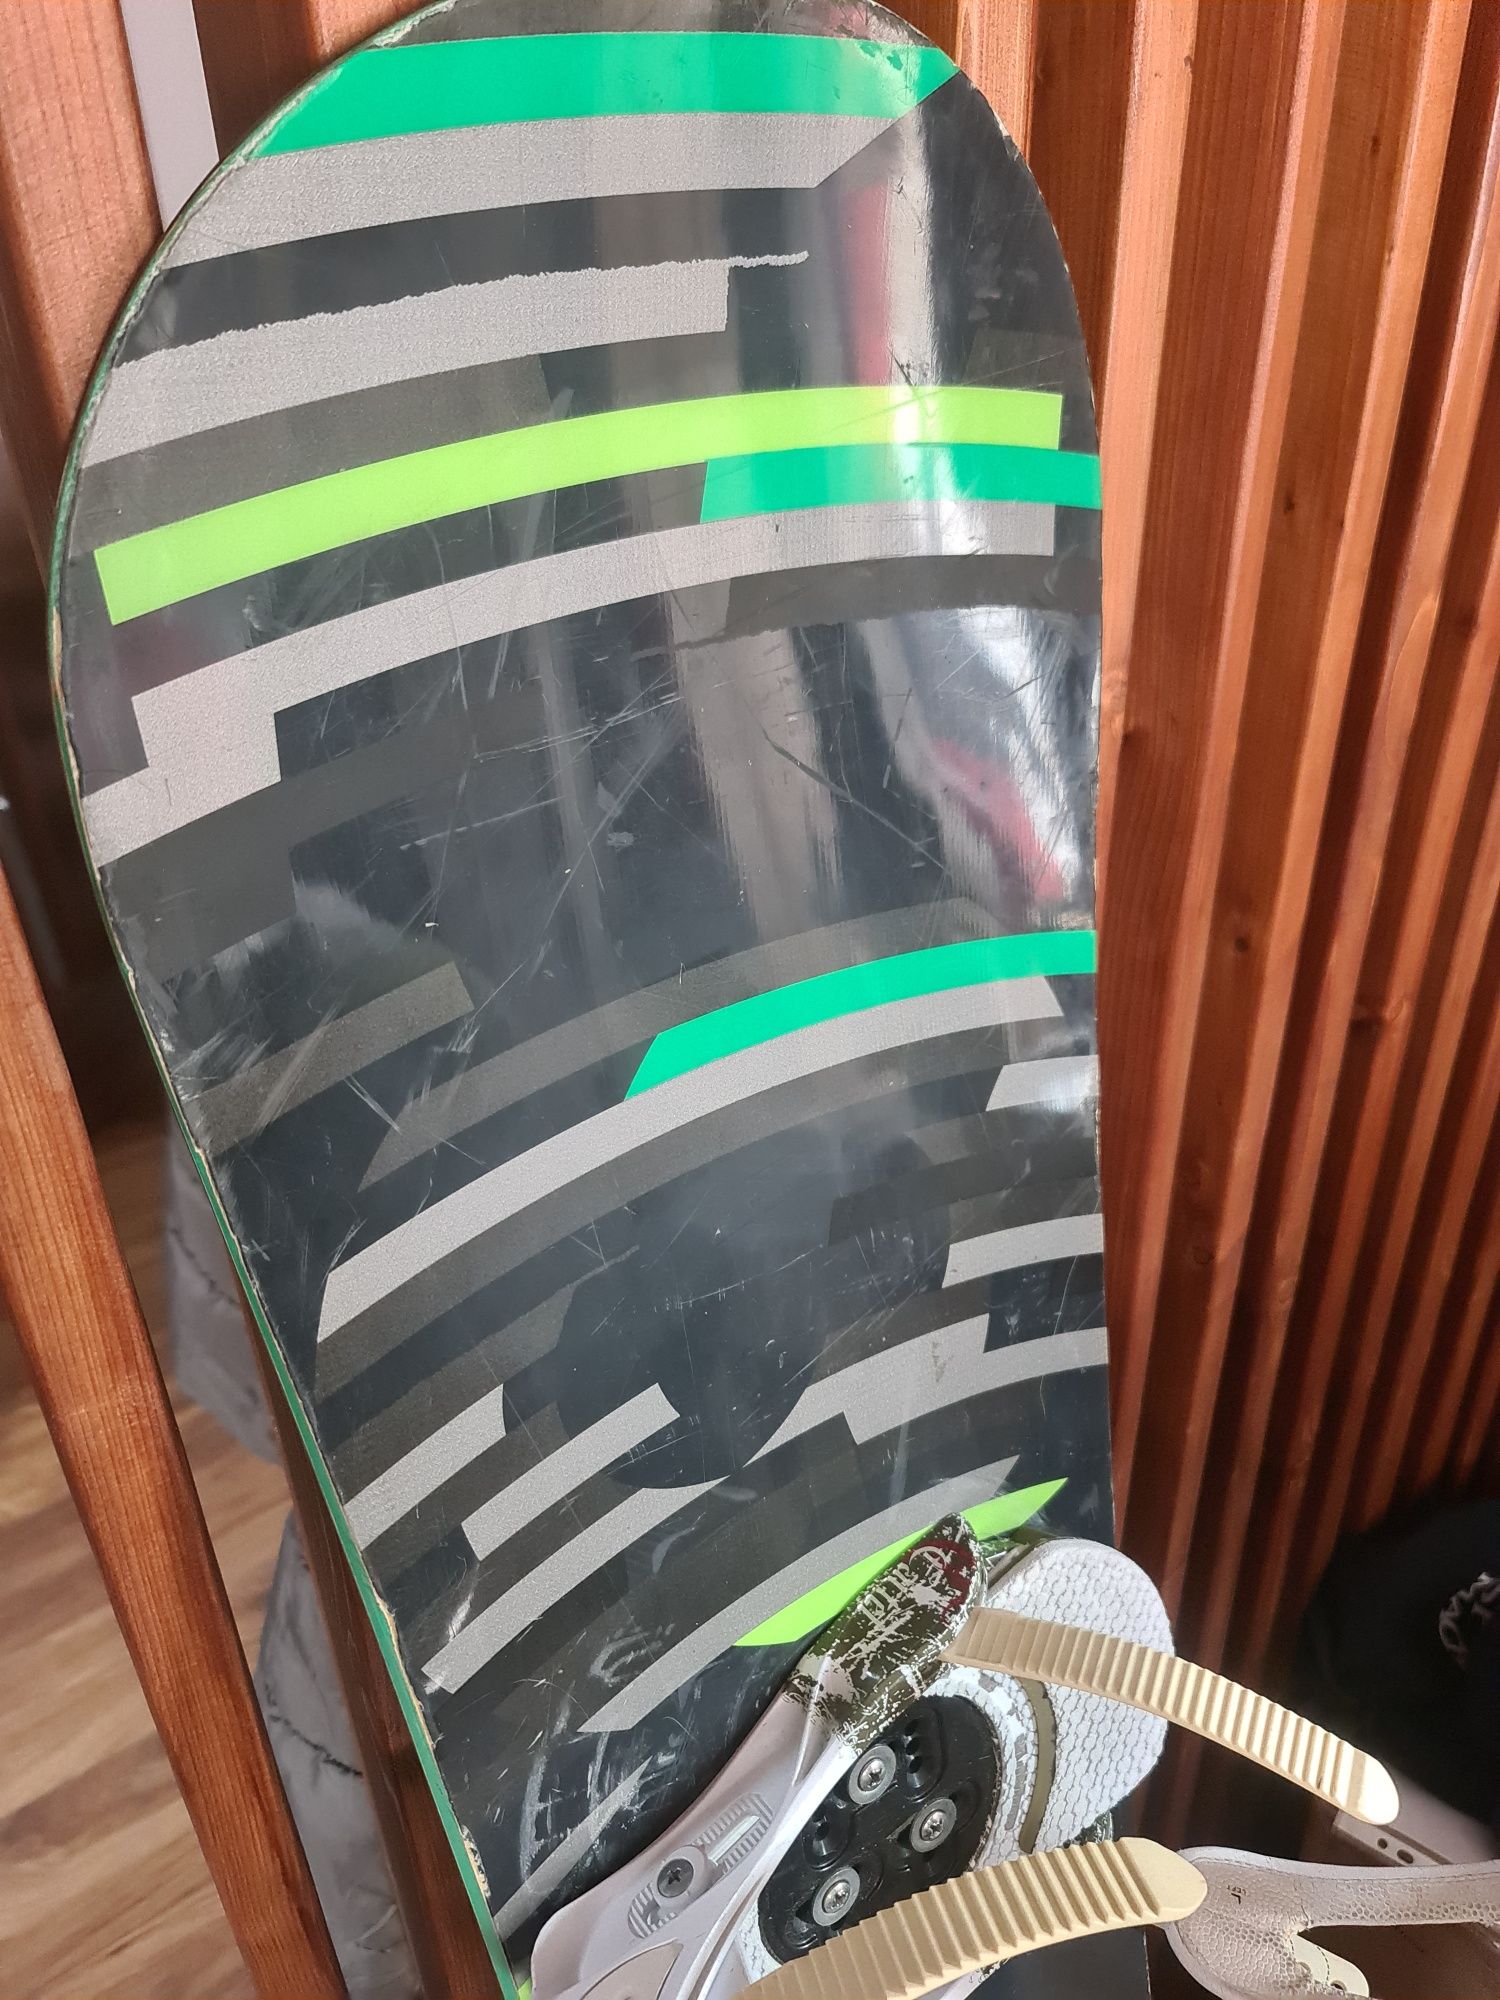 Burton Clash 55 (155cm) Snowboard